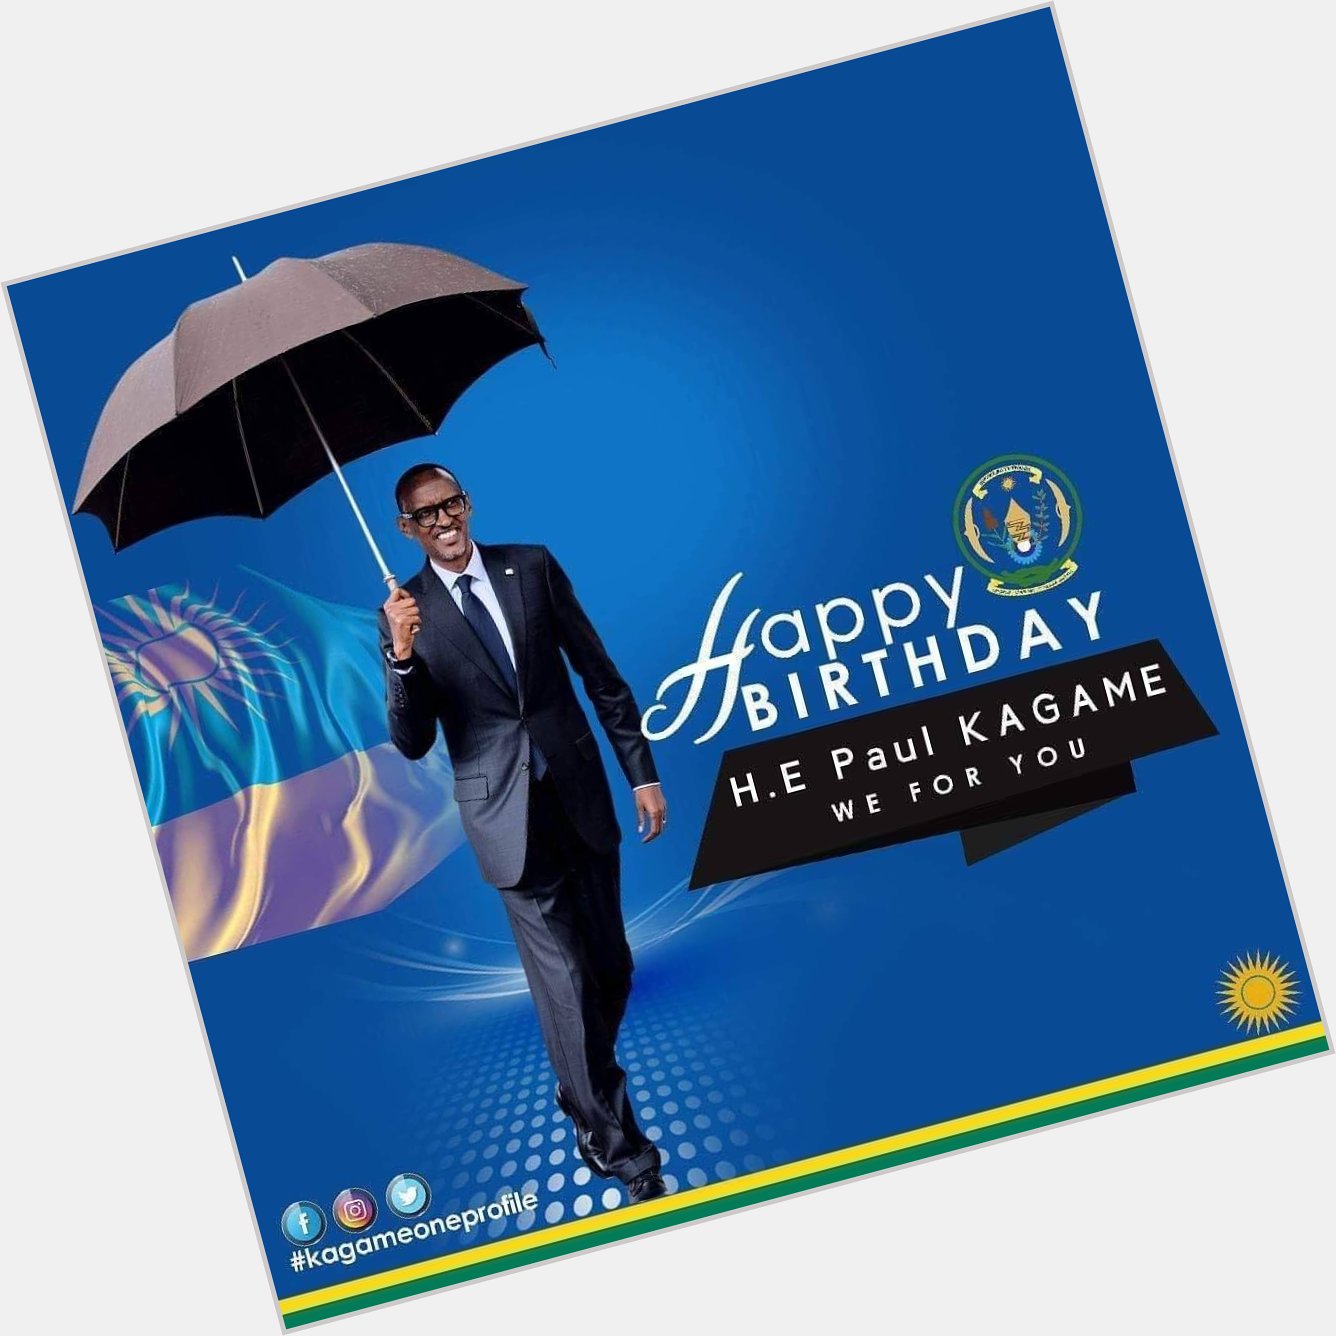   Happy birthday to H.E Paul Kagame the president of Rwanda. We wish u all the best 